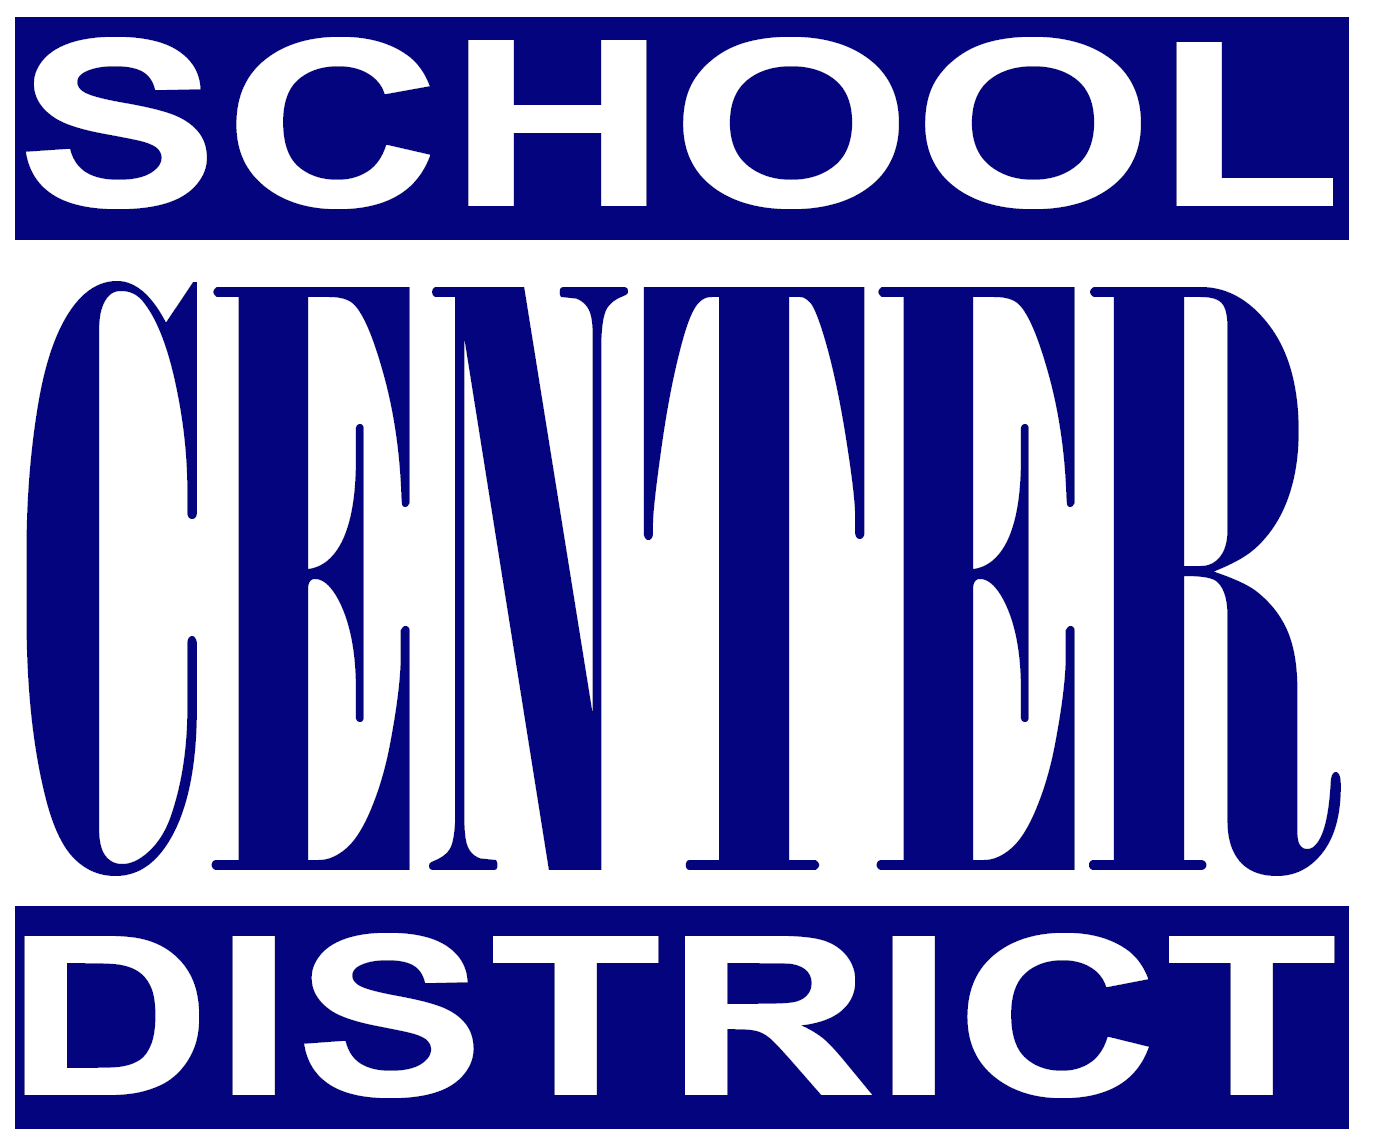 Center School District logo